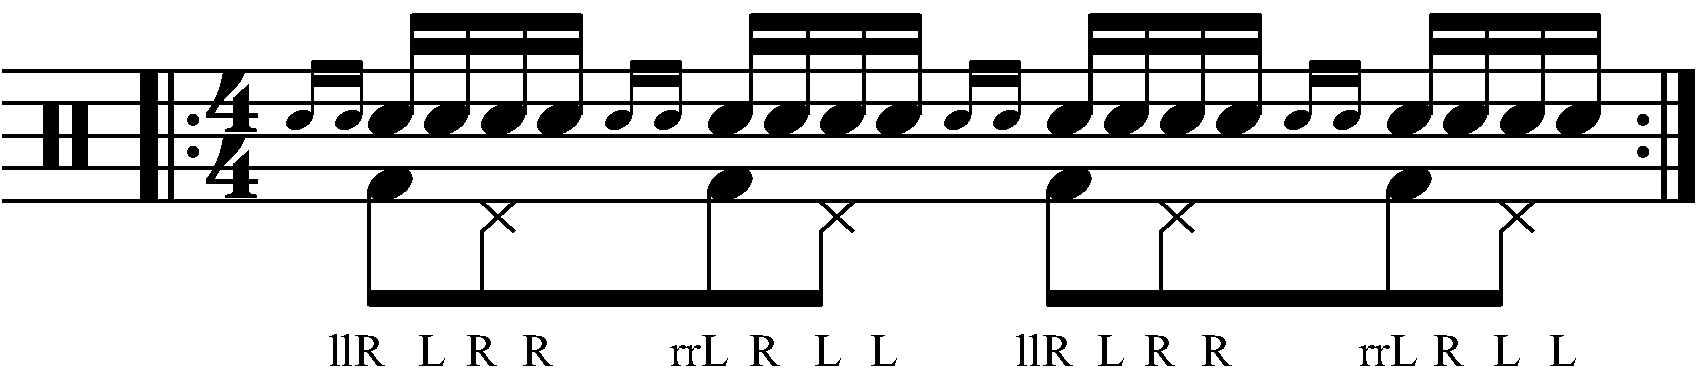 Adding eighth note feet under a Dragadiddle